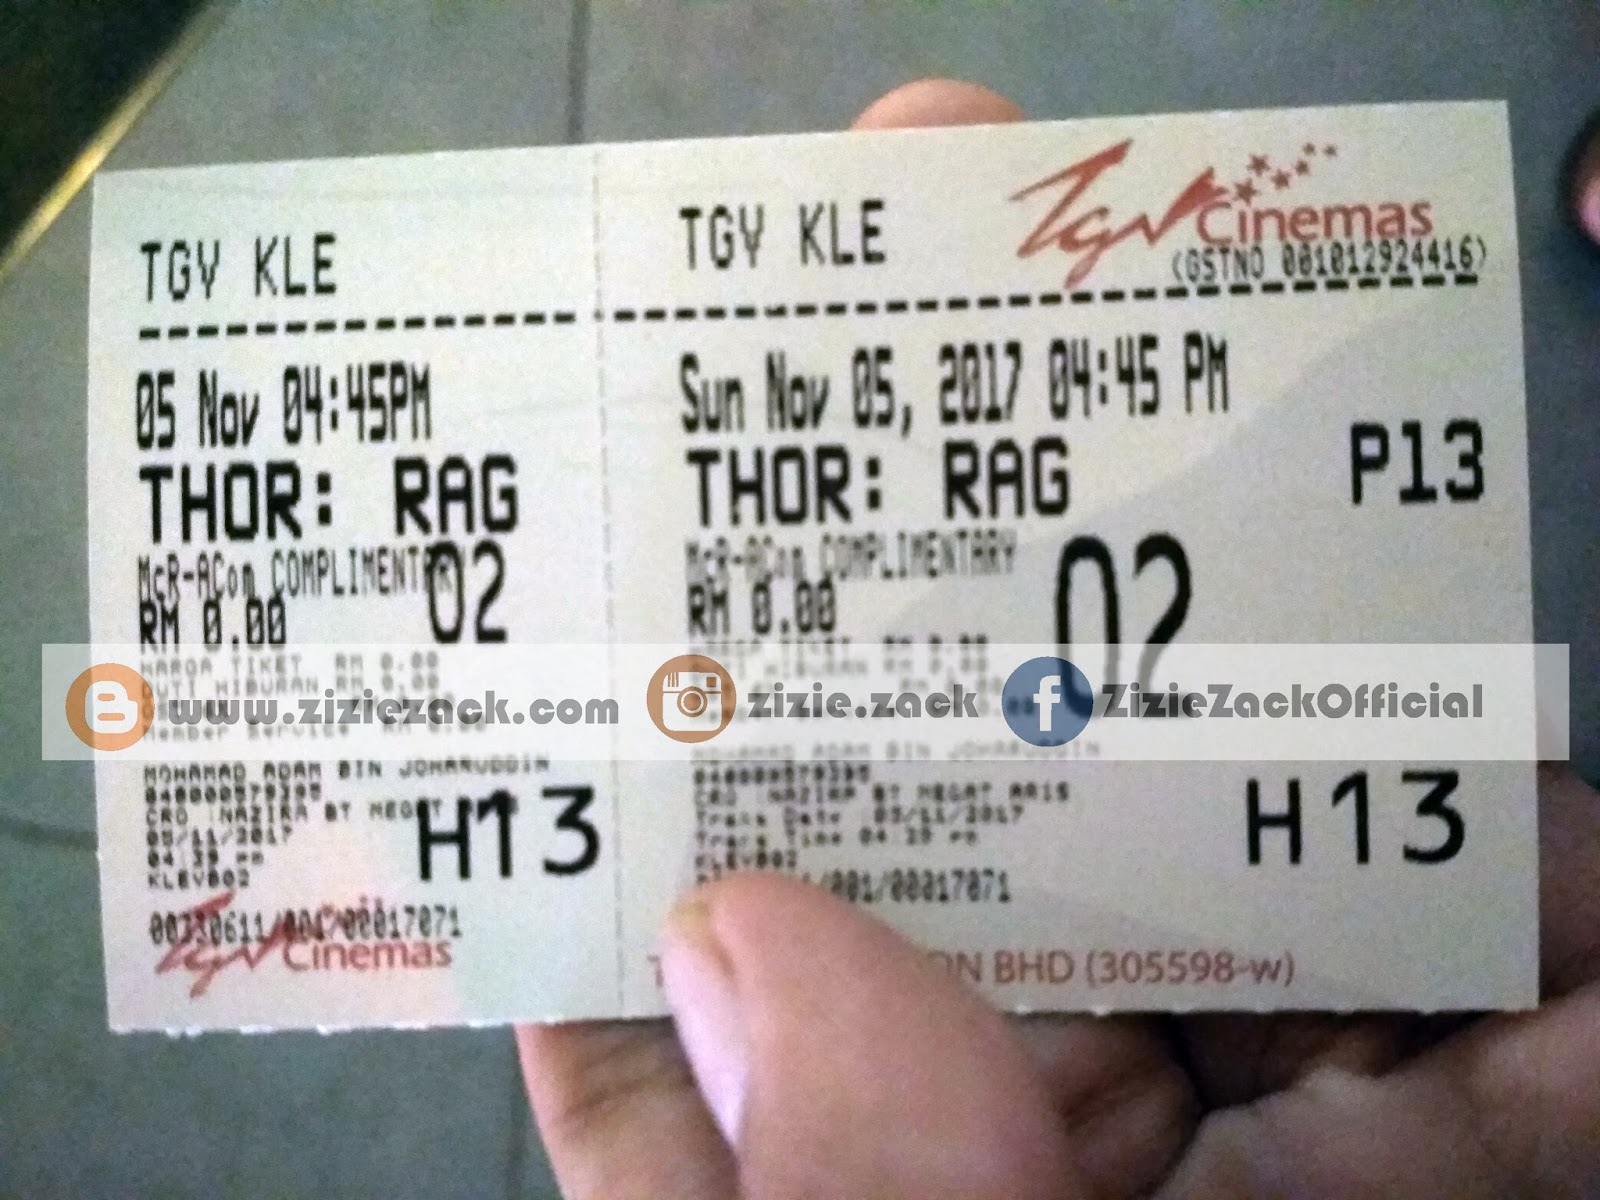 Used my free movie ticket Teehe